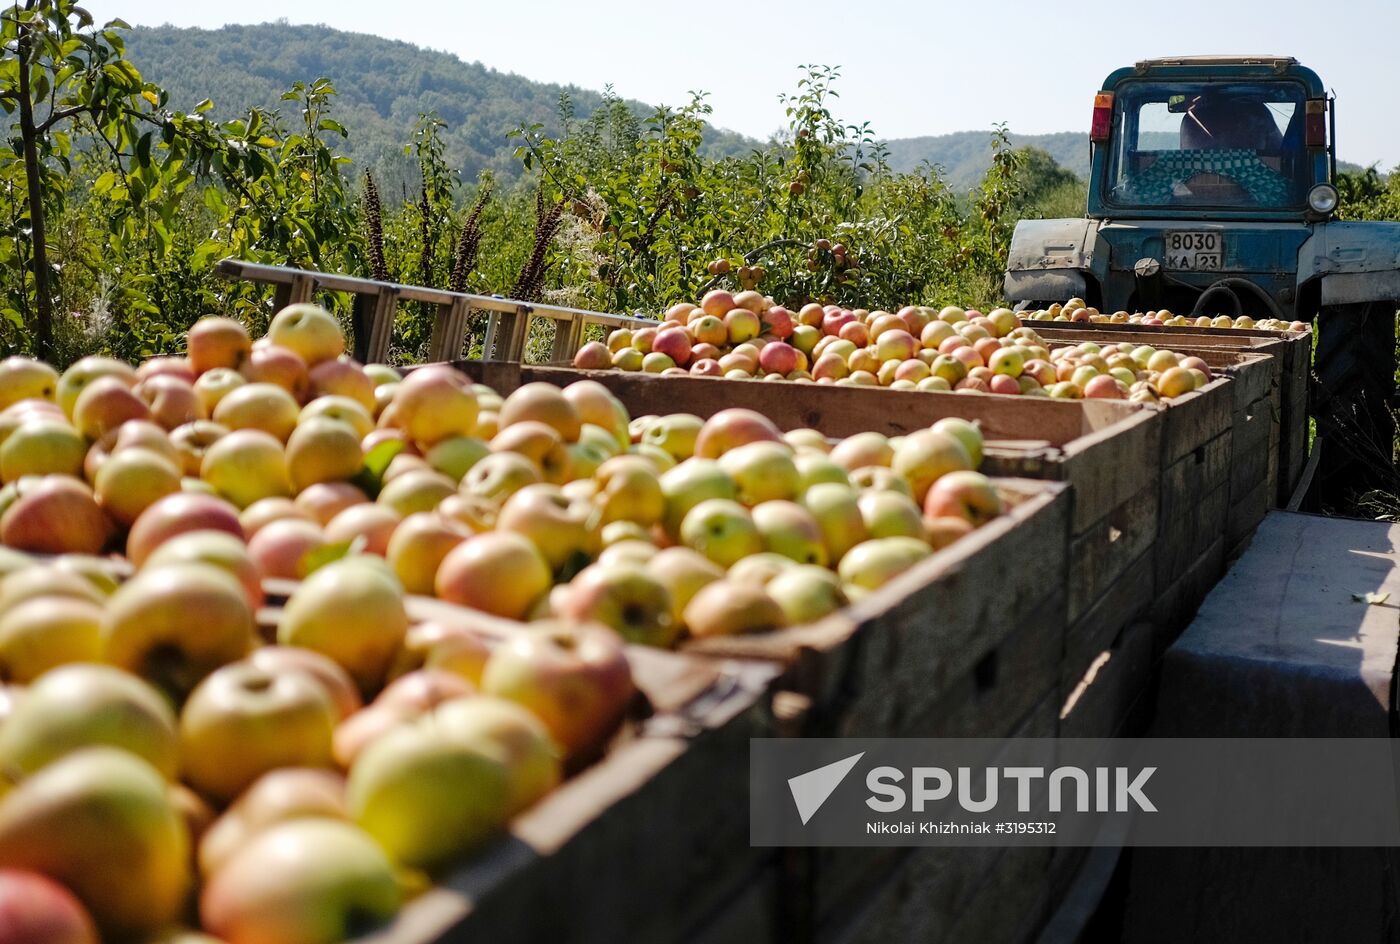 Apple harvest in Krasnodar Region